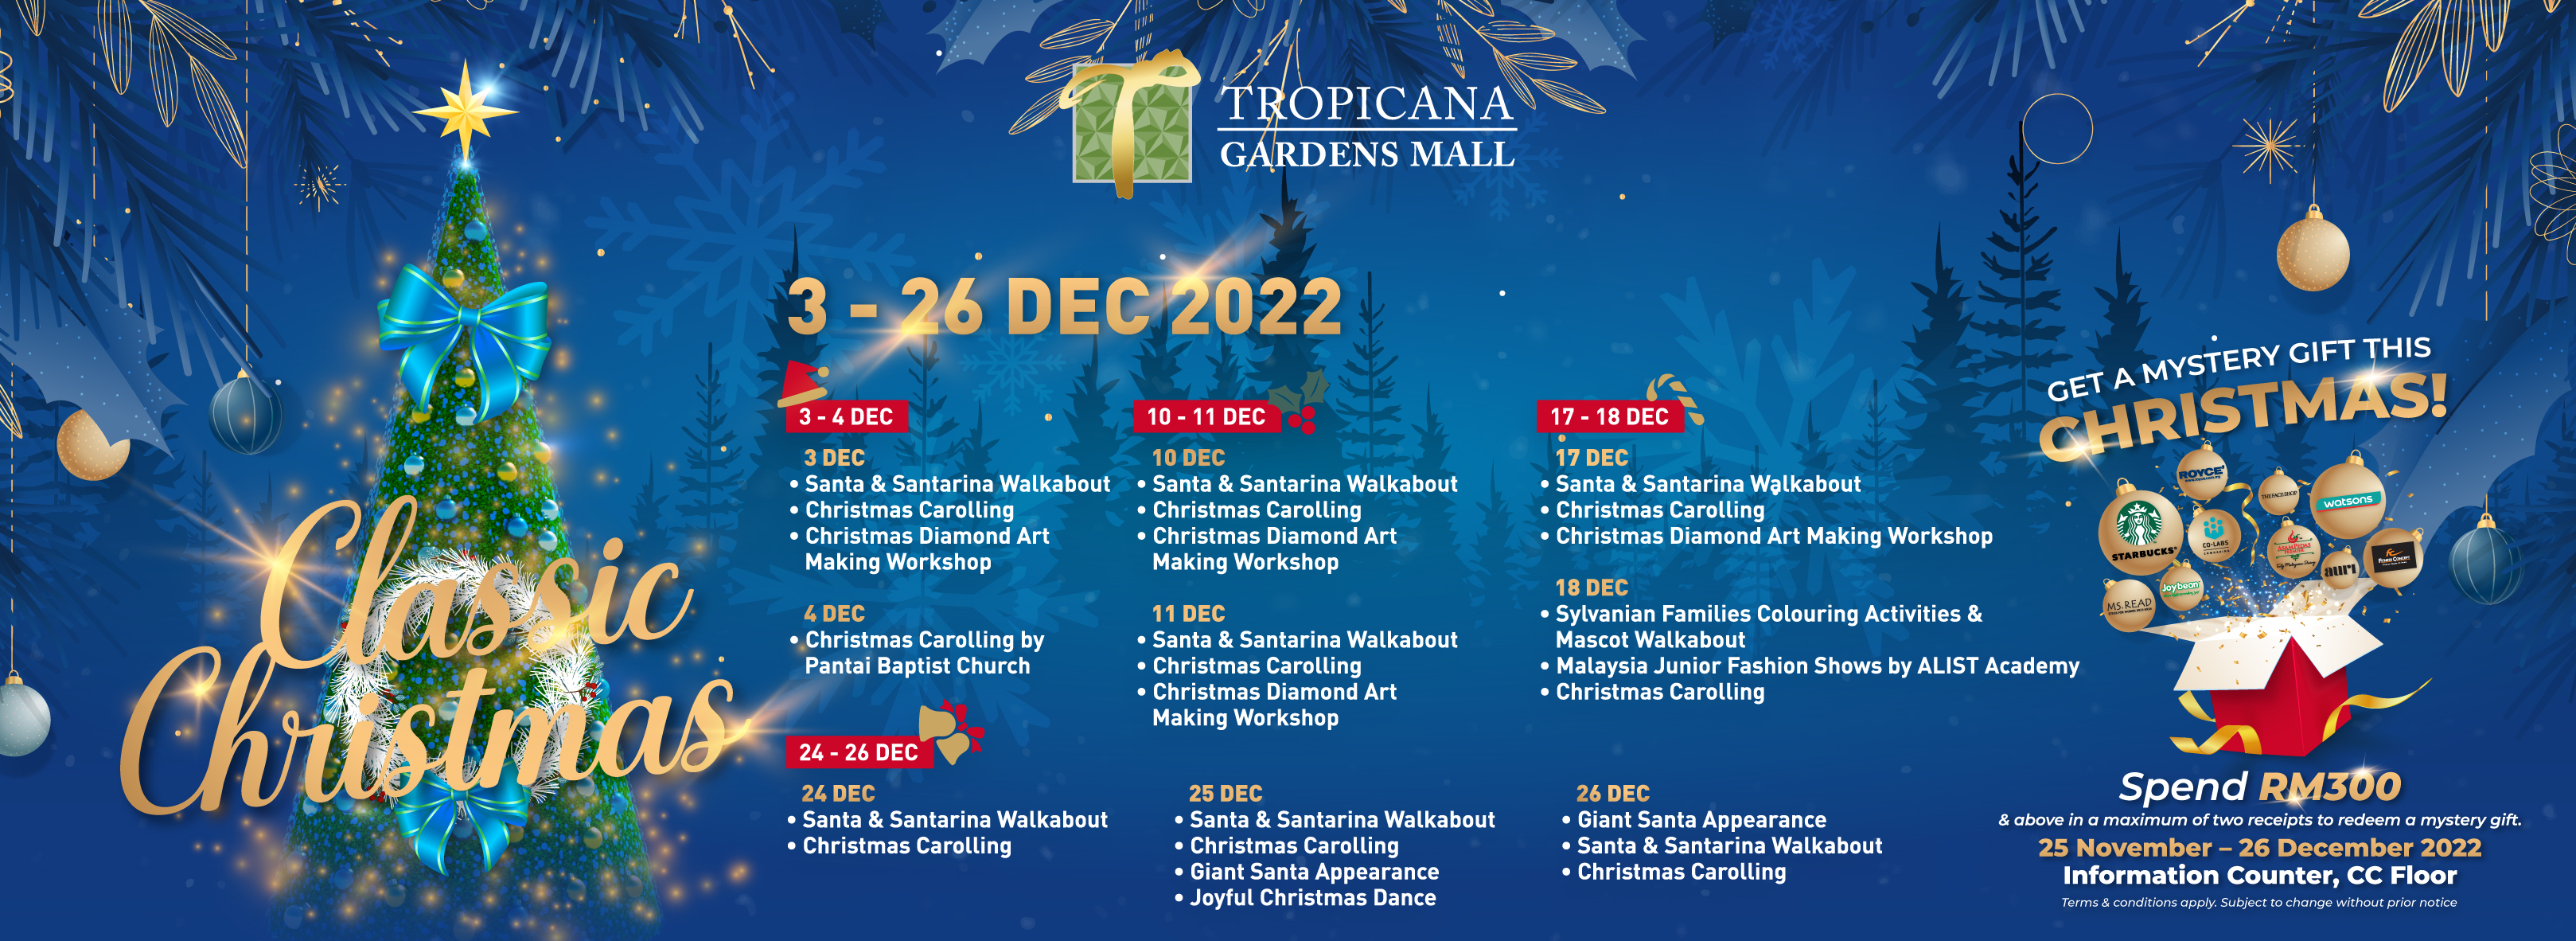 Tropicana Gardens Mall Classic Christmas Activities